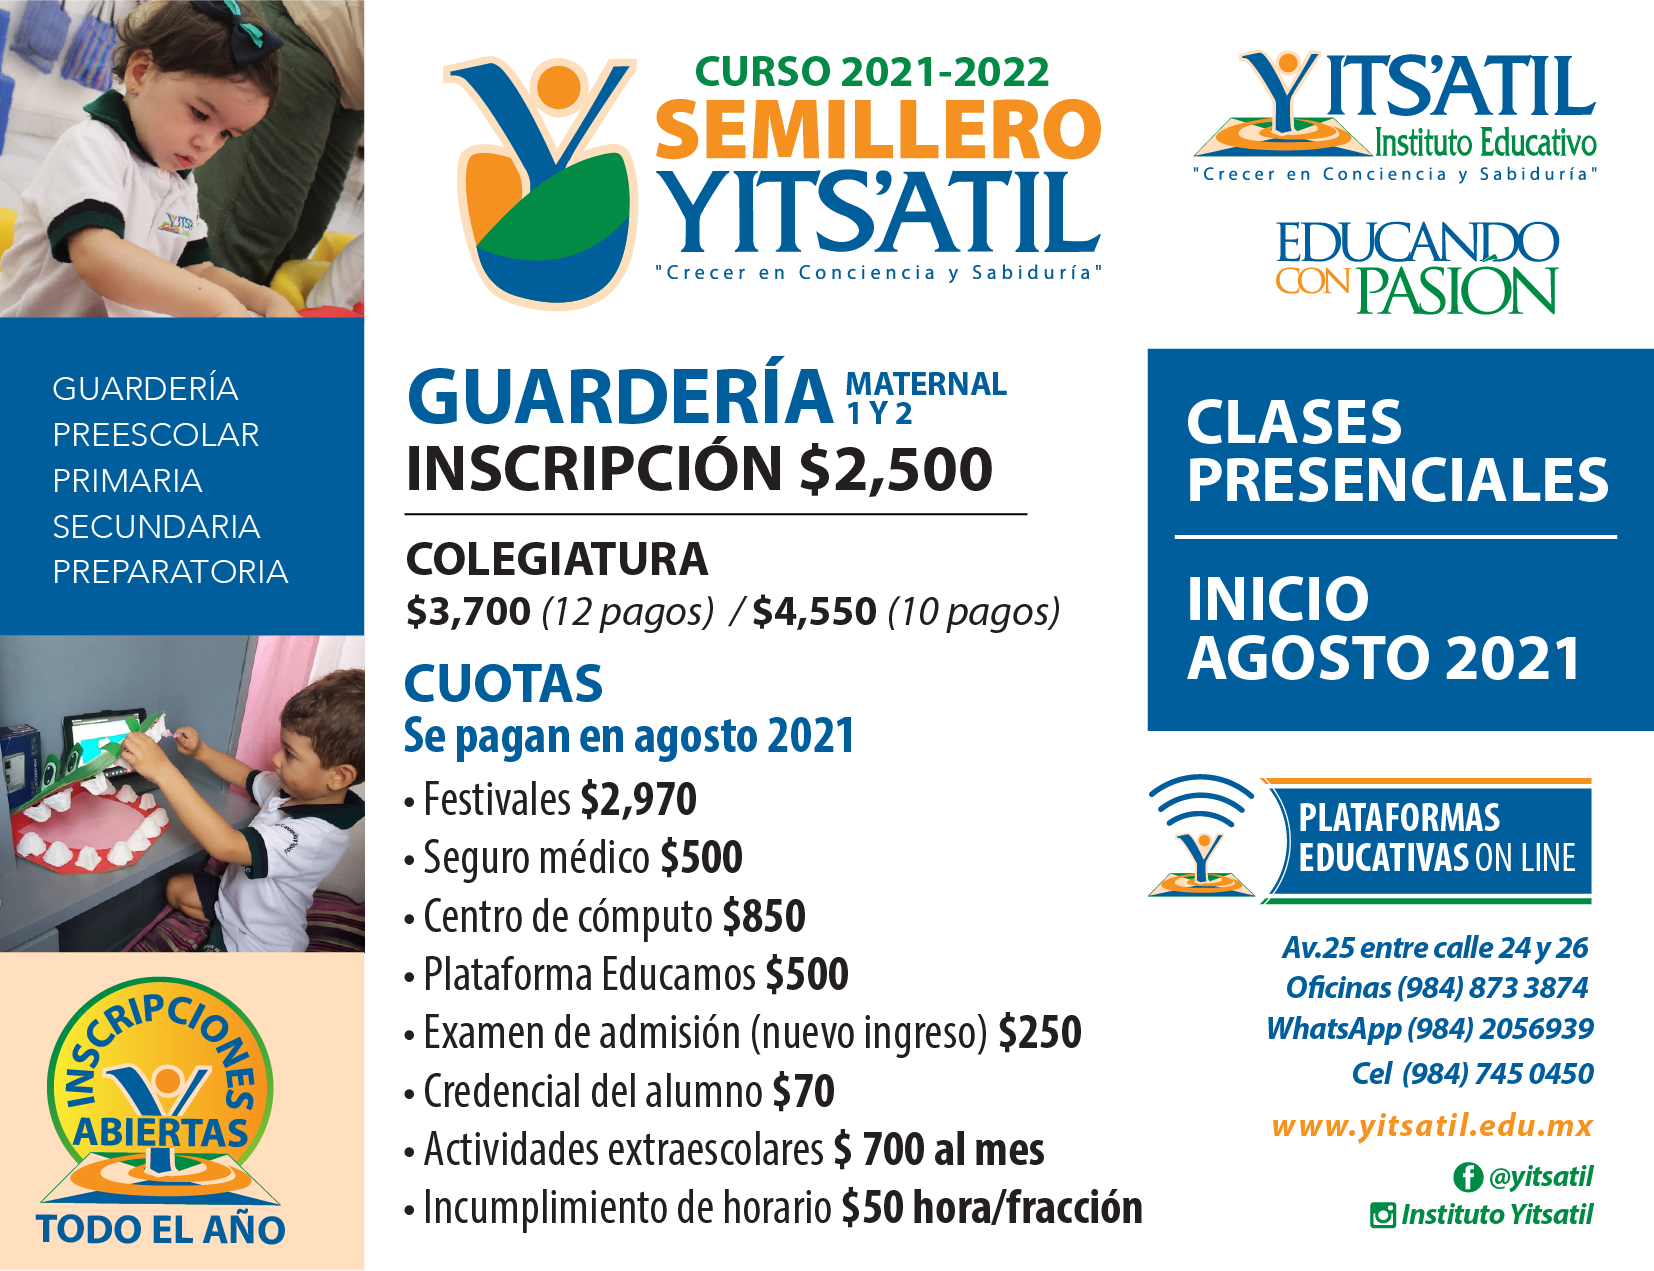 //yitsatil.edu.mx/storage/2021/09/YITSA-COSTO2122-03.png